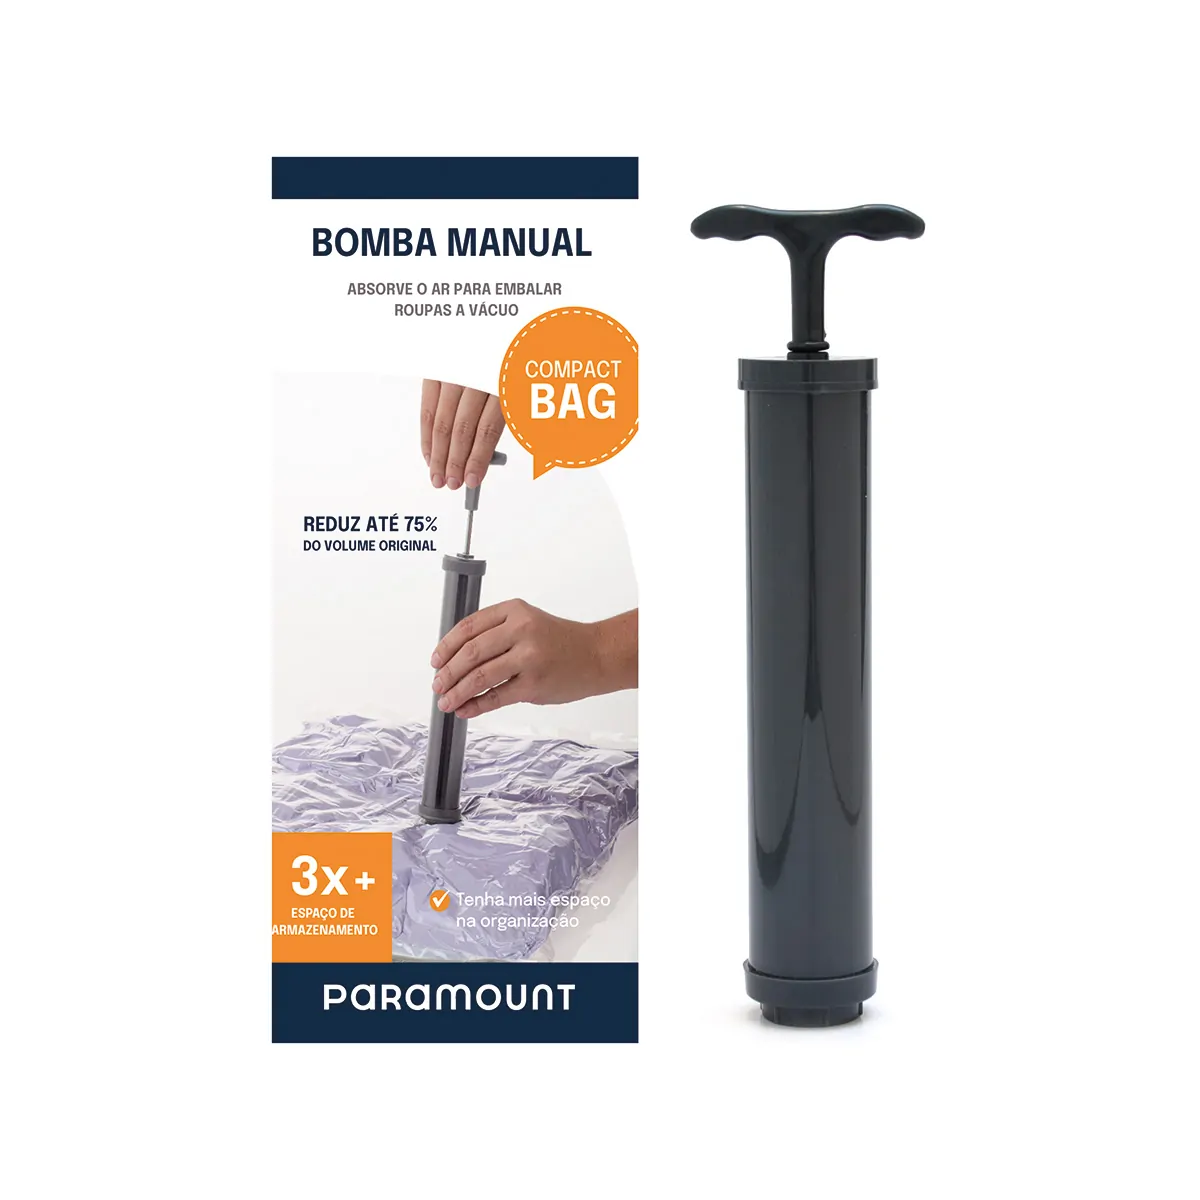 Bomba Manual Compact Bag